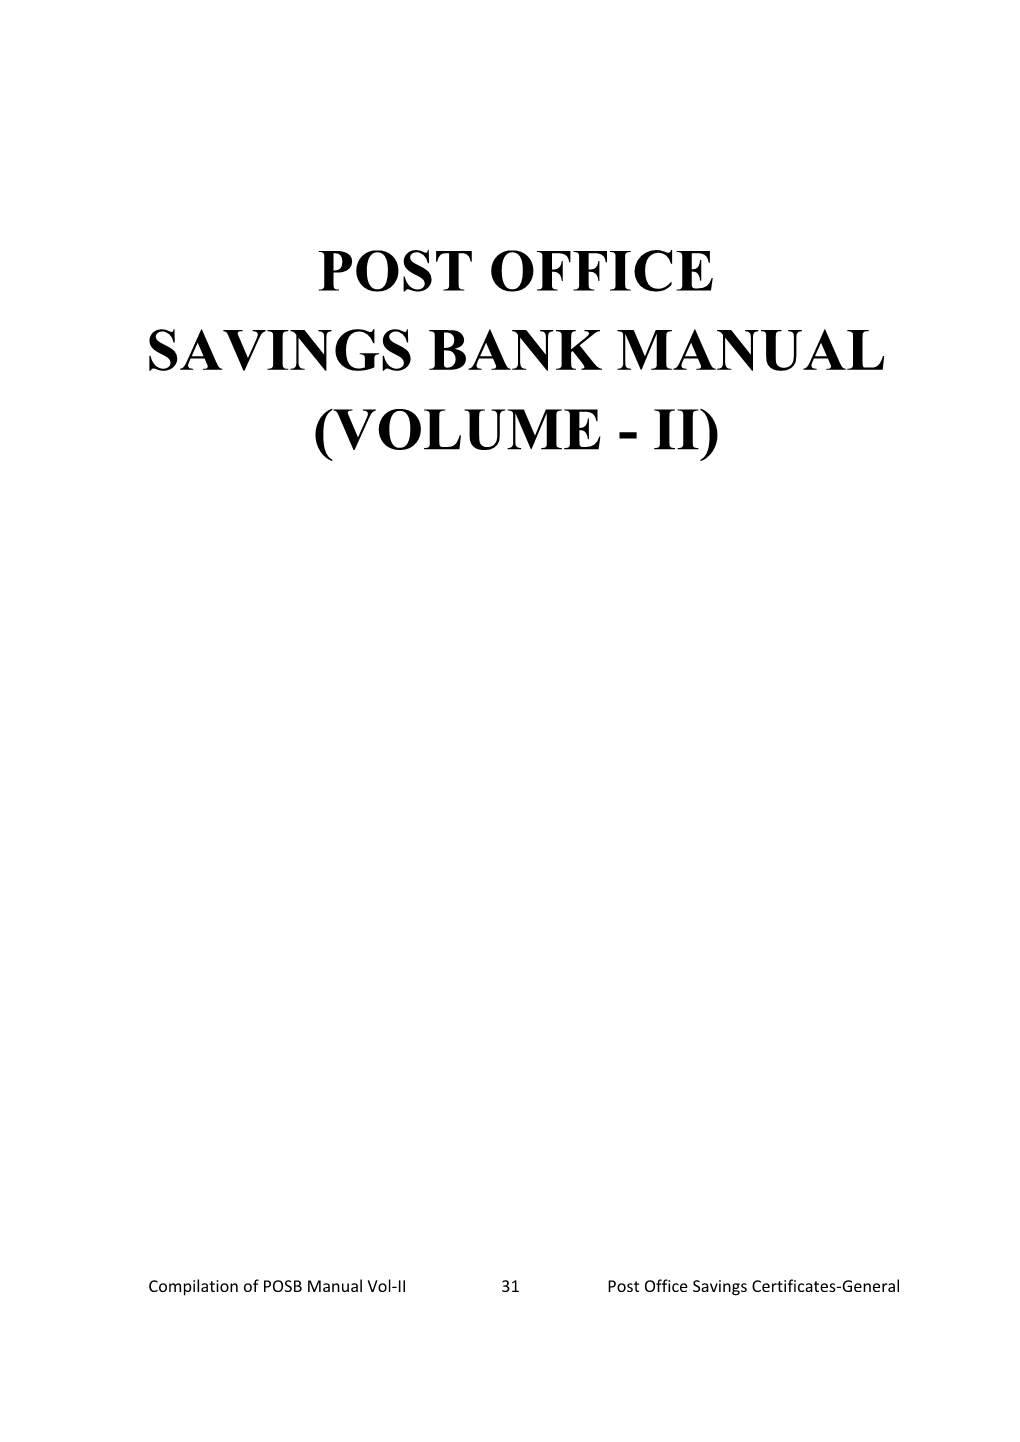 Post Office Savings Bank Manual (Volume - Ii)